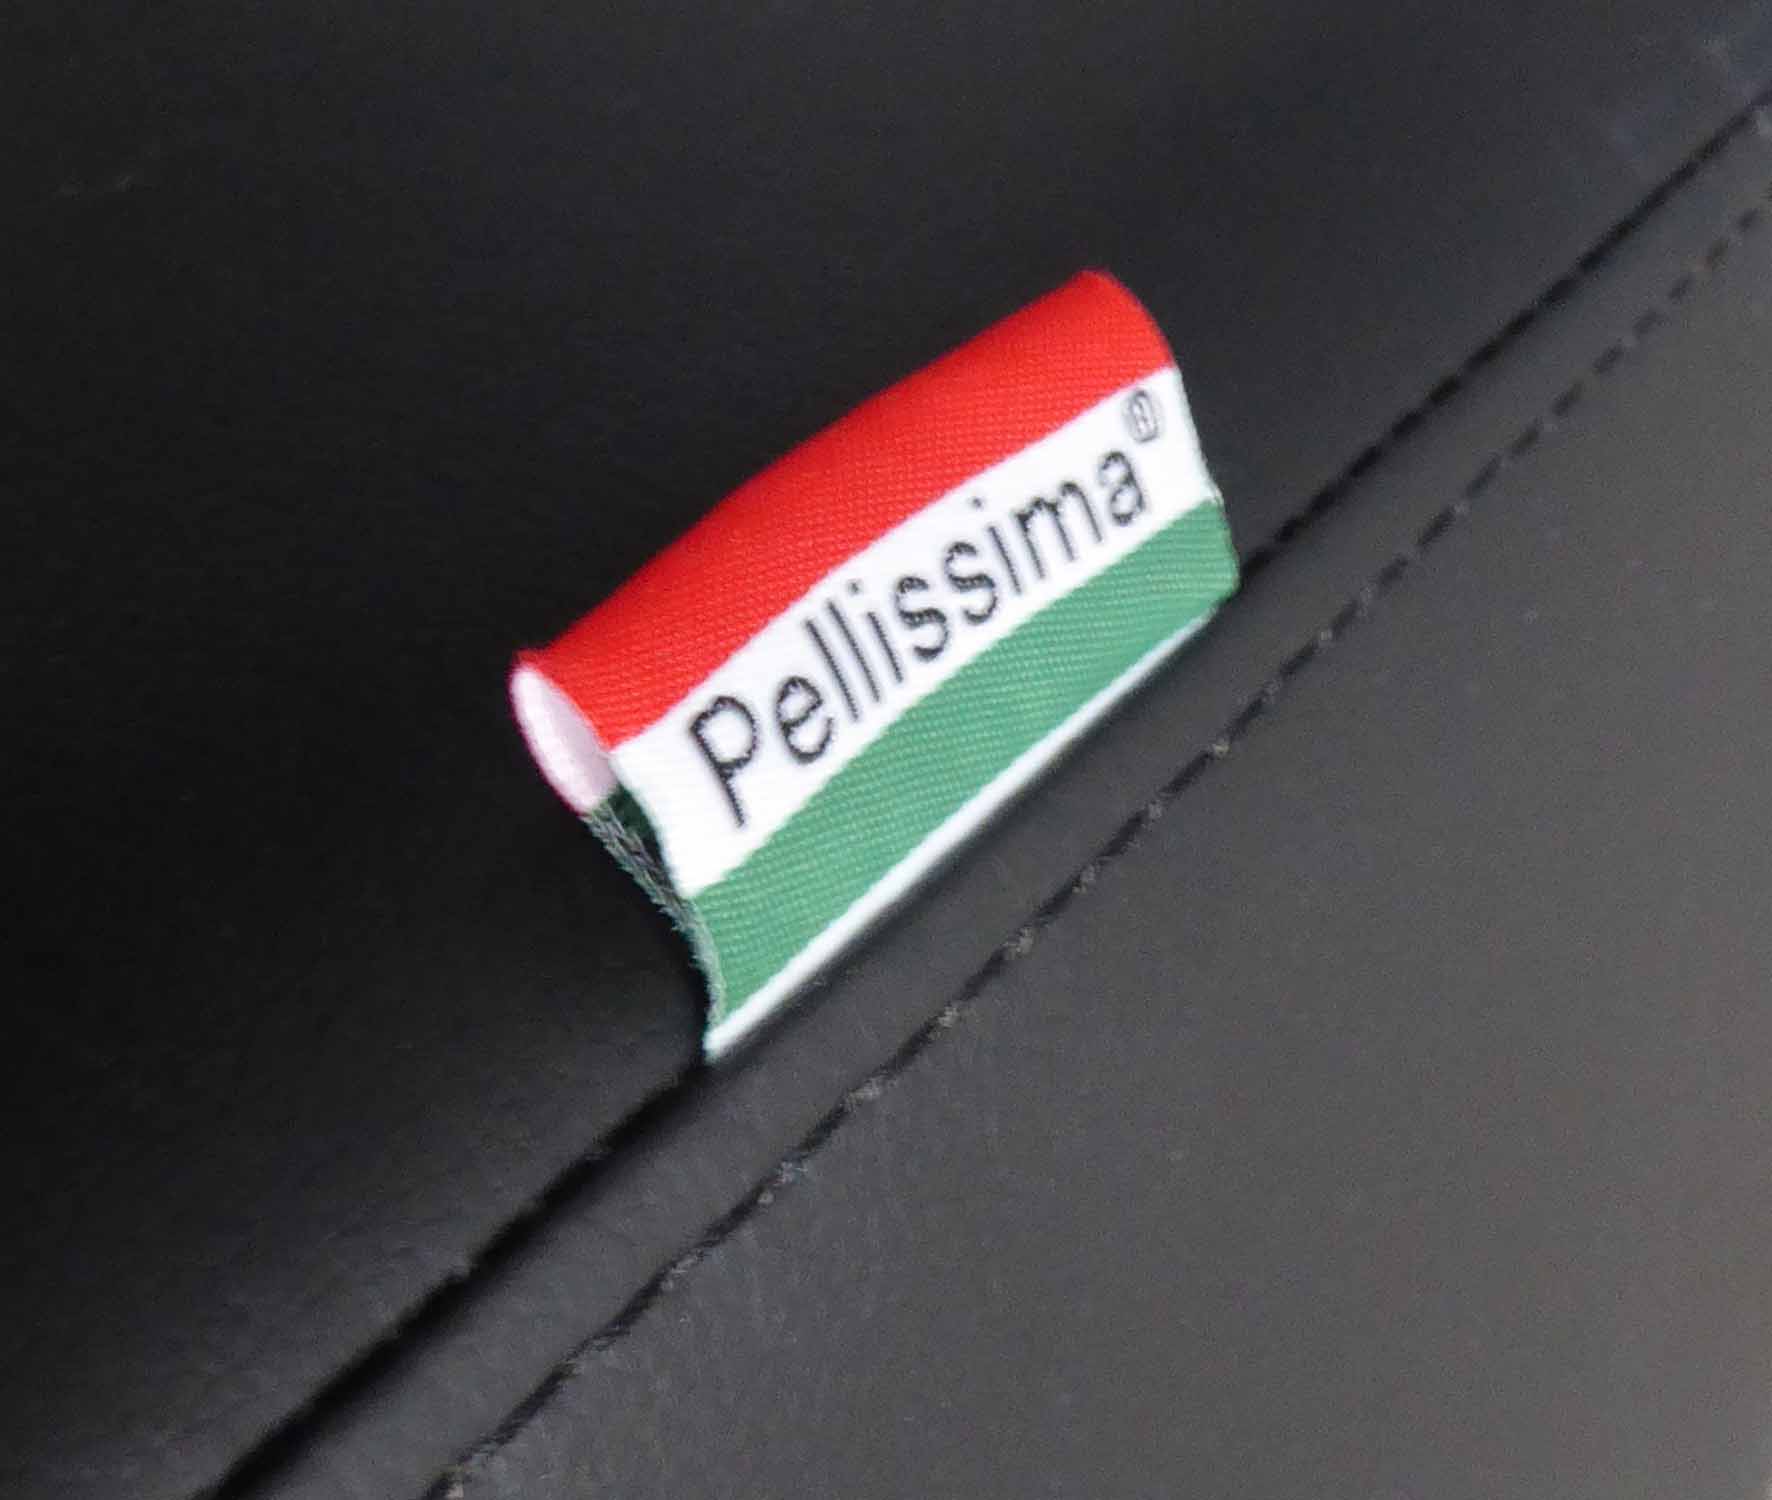 PELLISSIMA ARMCHAIR, vegan leather finish, 96cm W. - Image 2 of 2